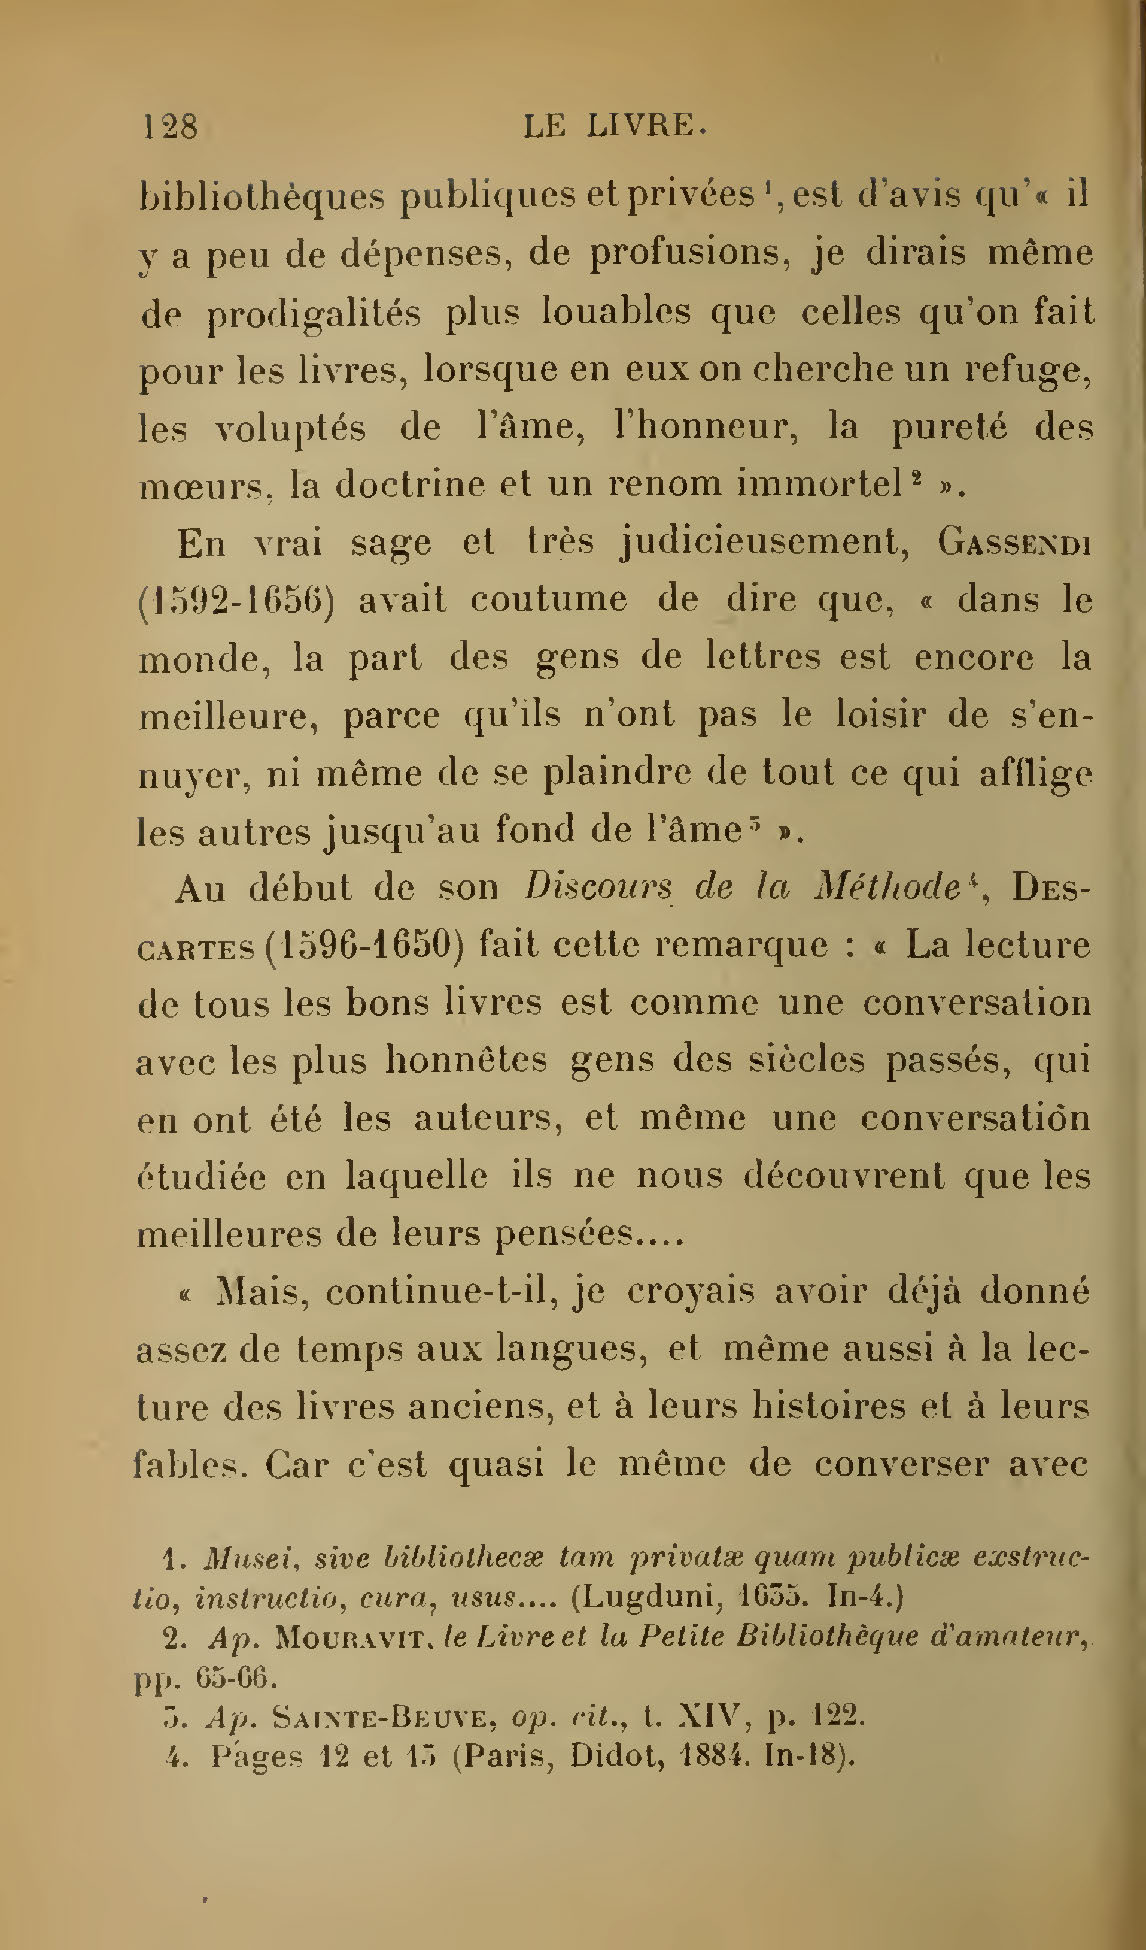 Albert Cim, Le Livre, t. I, p. 128.